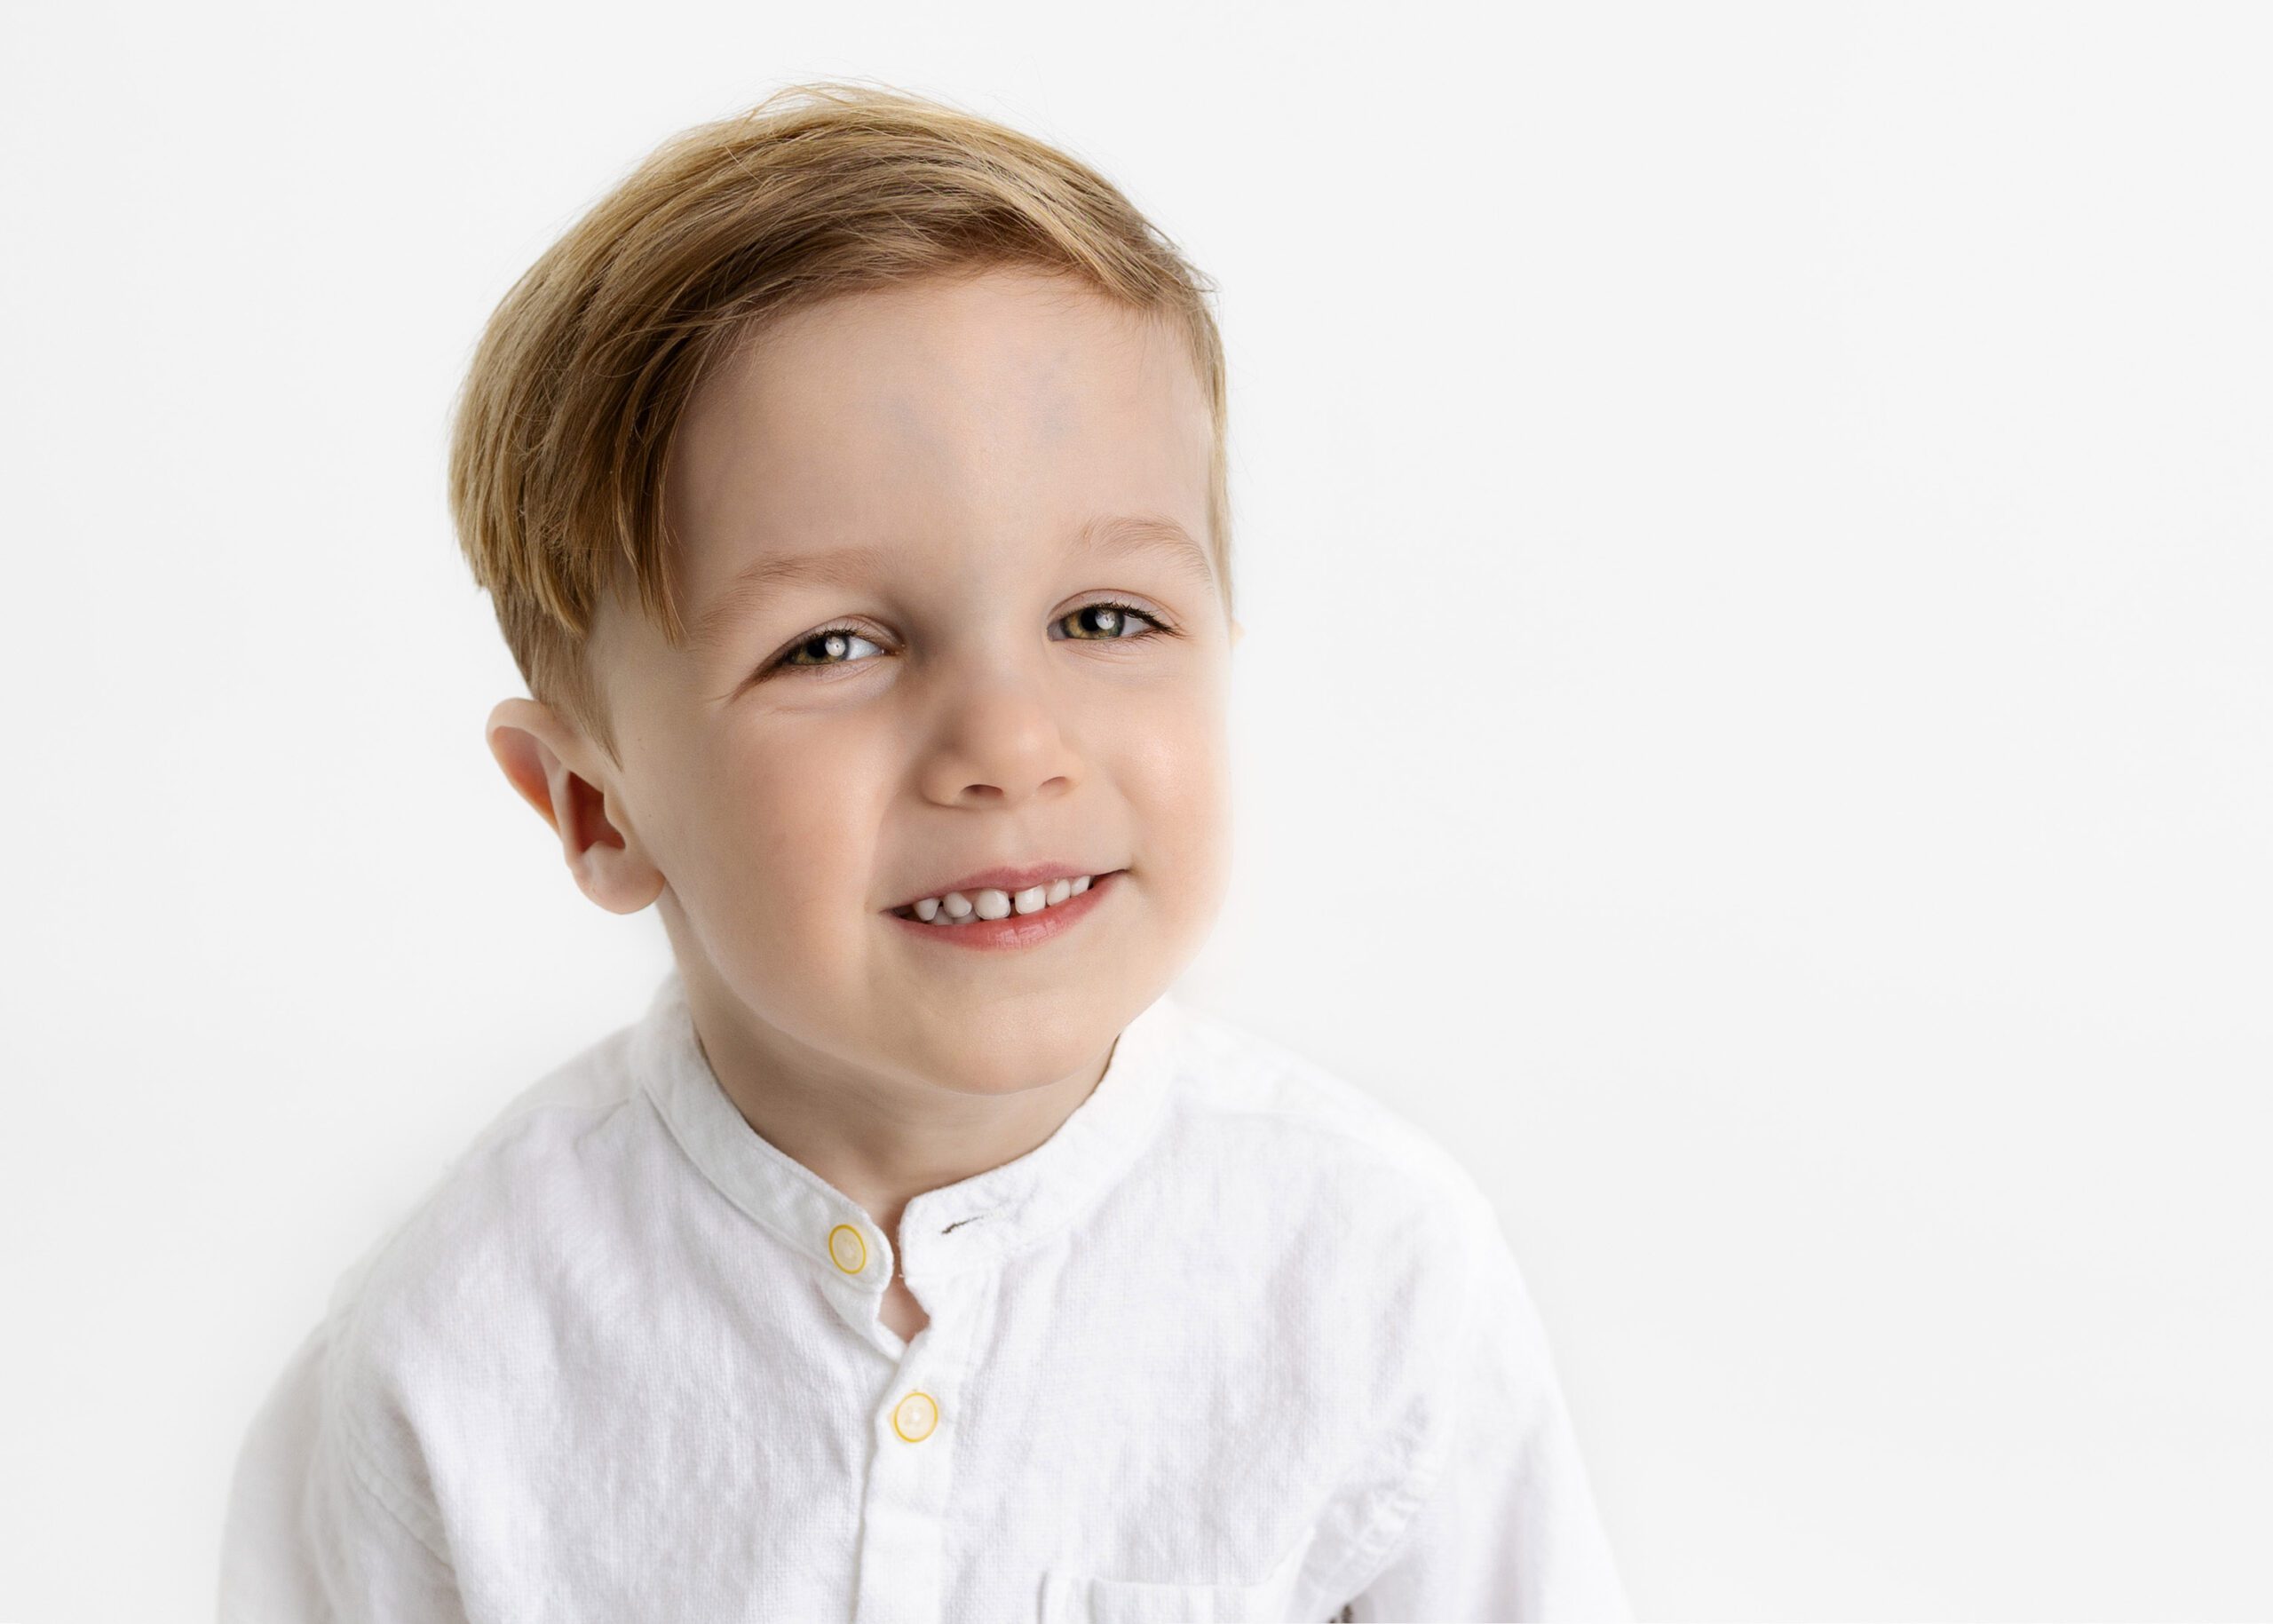 Toddler boy in white shirt smiling at the camera